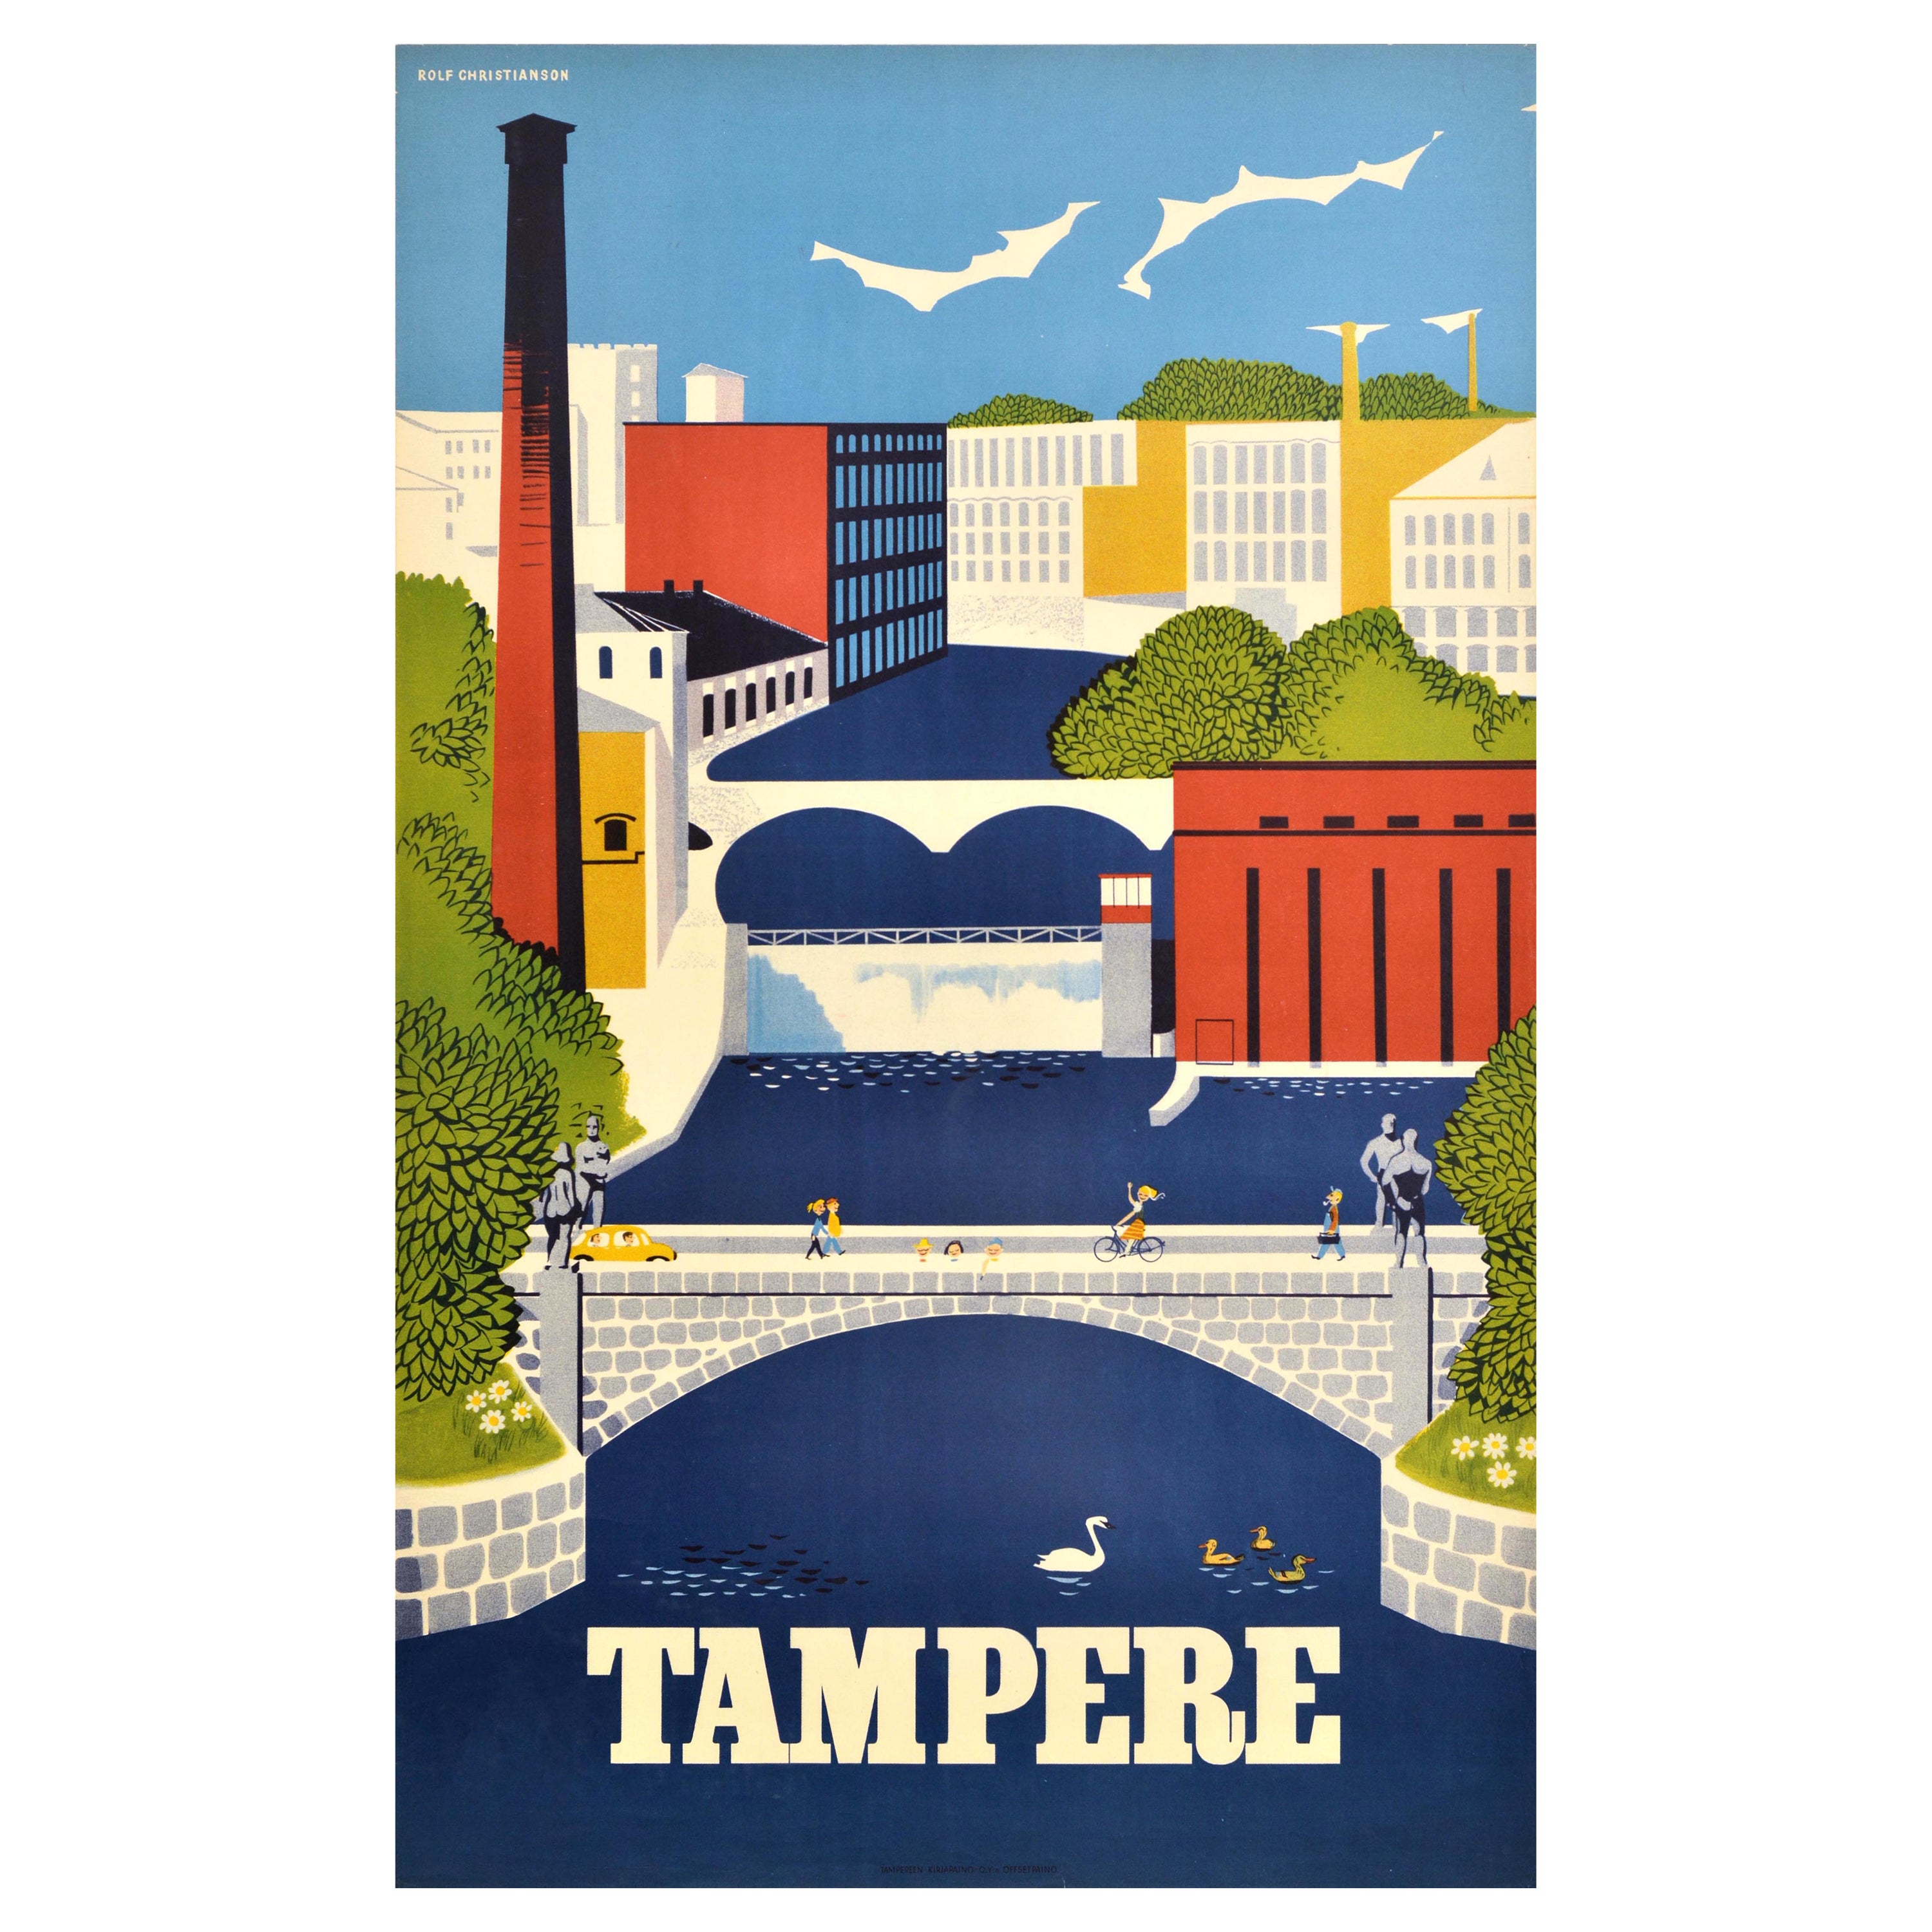 Original-Vintage-Reiseplakat Tampere Finnland Rolf Christianson Suomi Nordic im Angebot